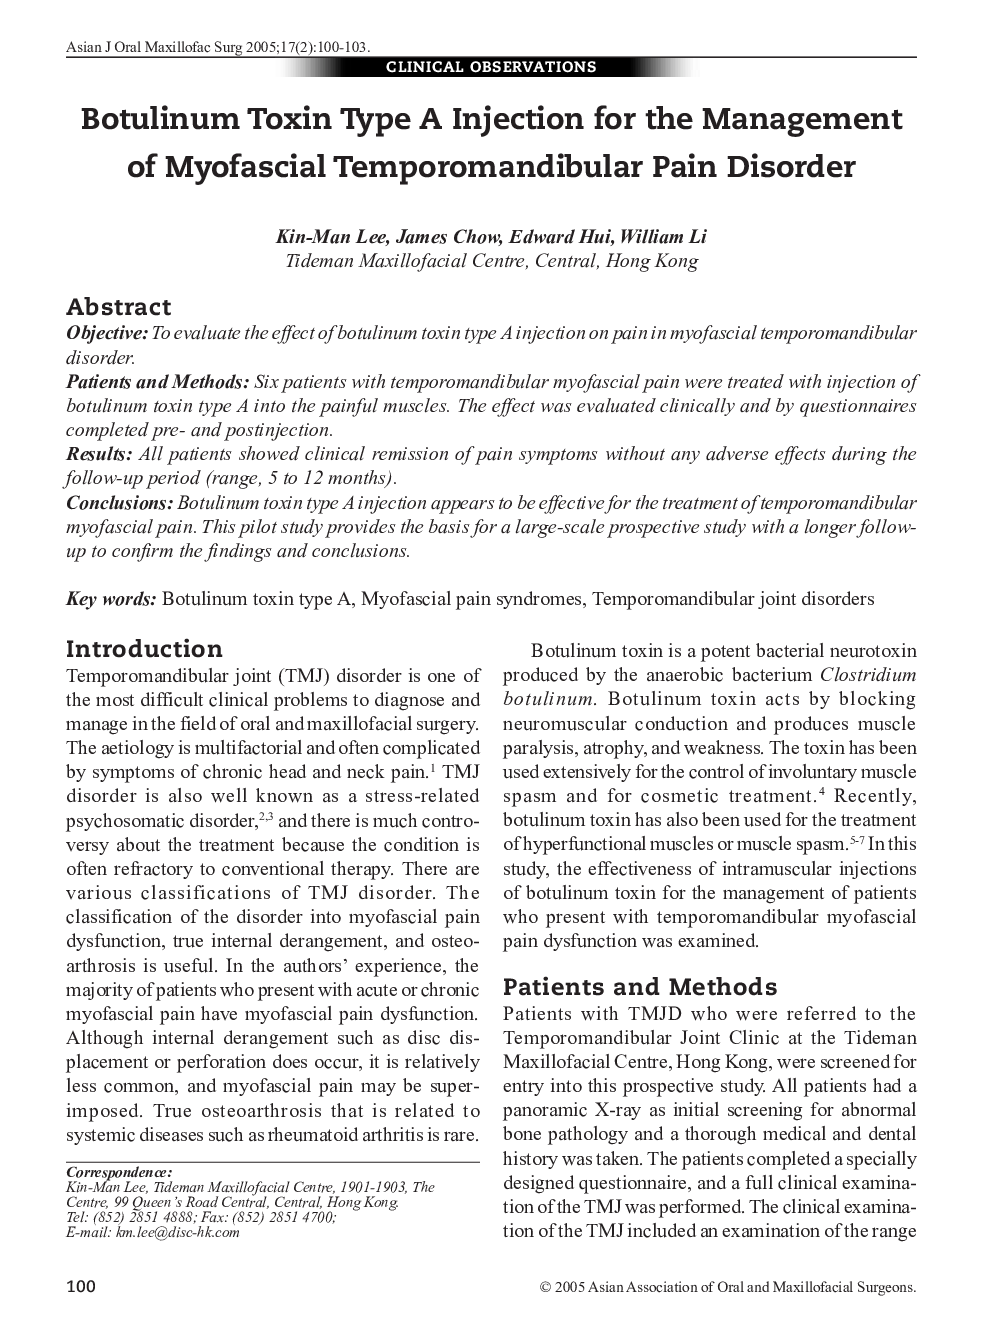 Botulinum Toxin Type A Injection for the Management of Myofascial Temporomandibular Pain Disorder